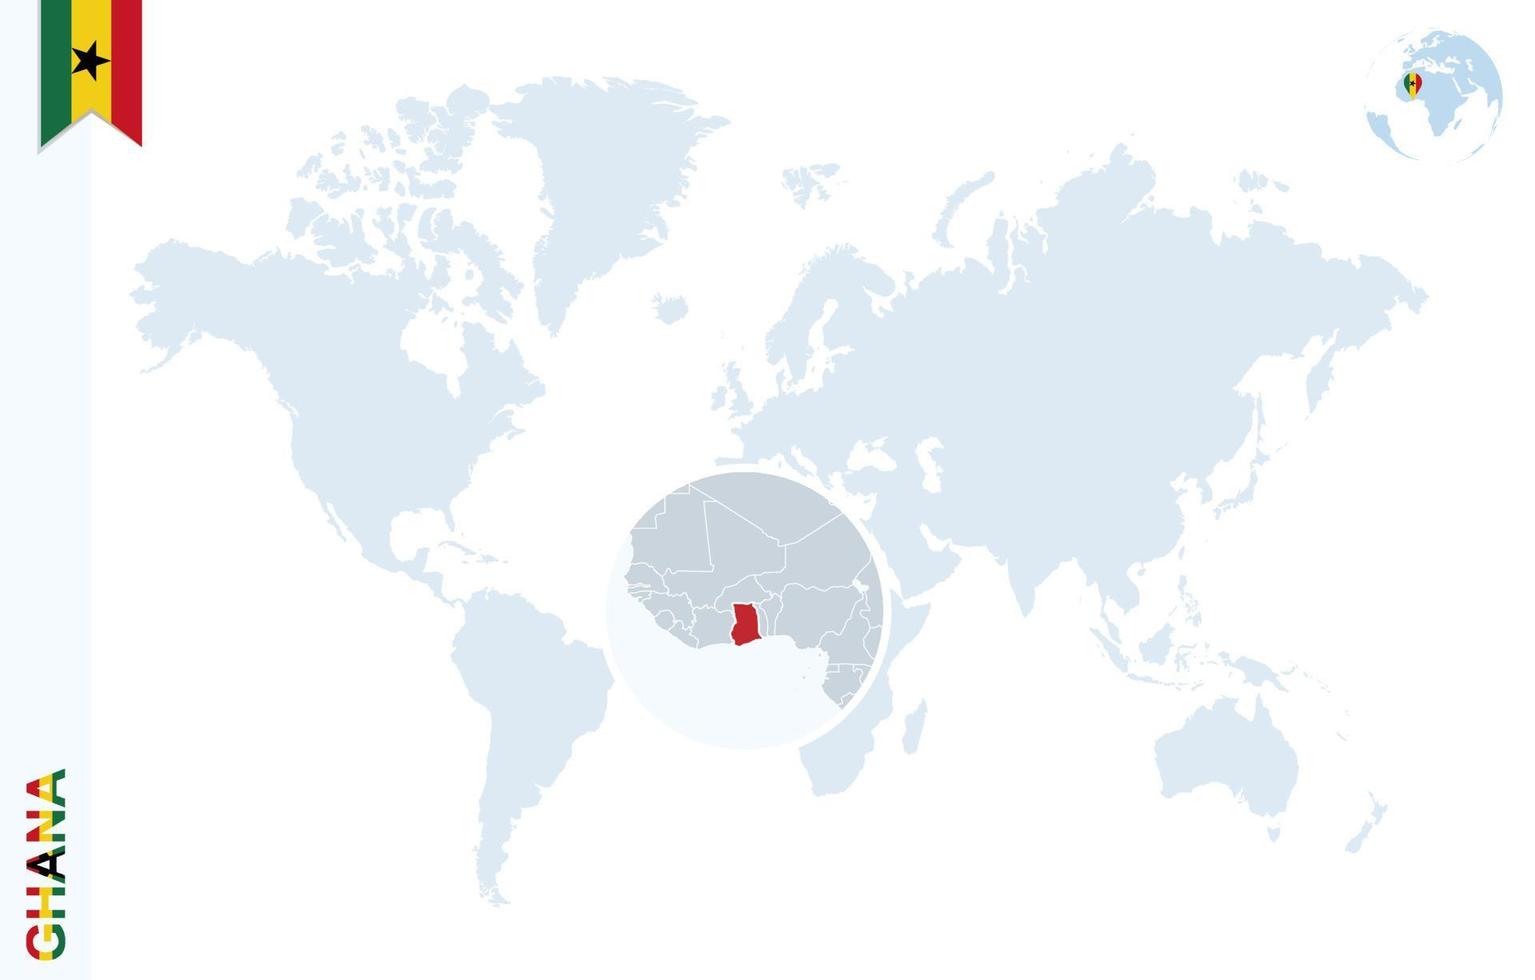 blu mondo carta geografica con ingrandimento su Ghana. vettore